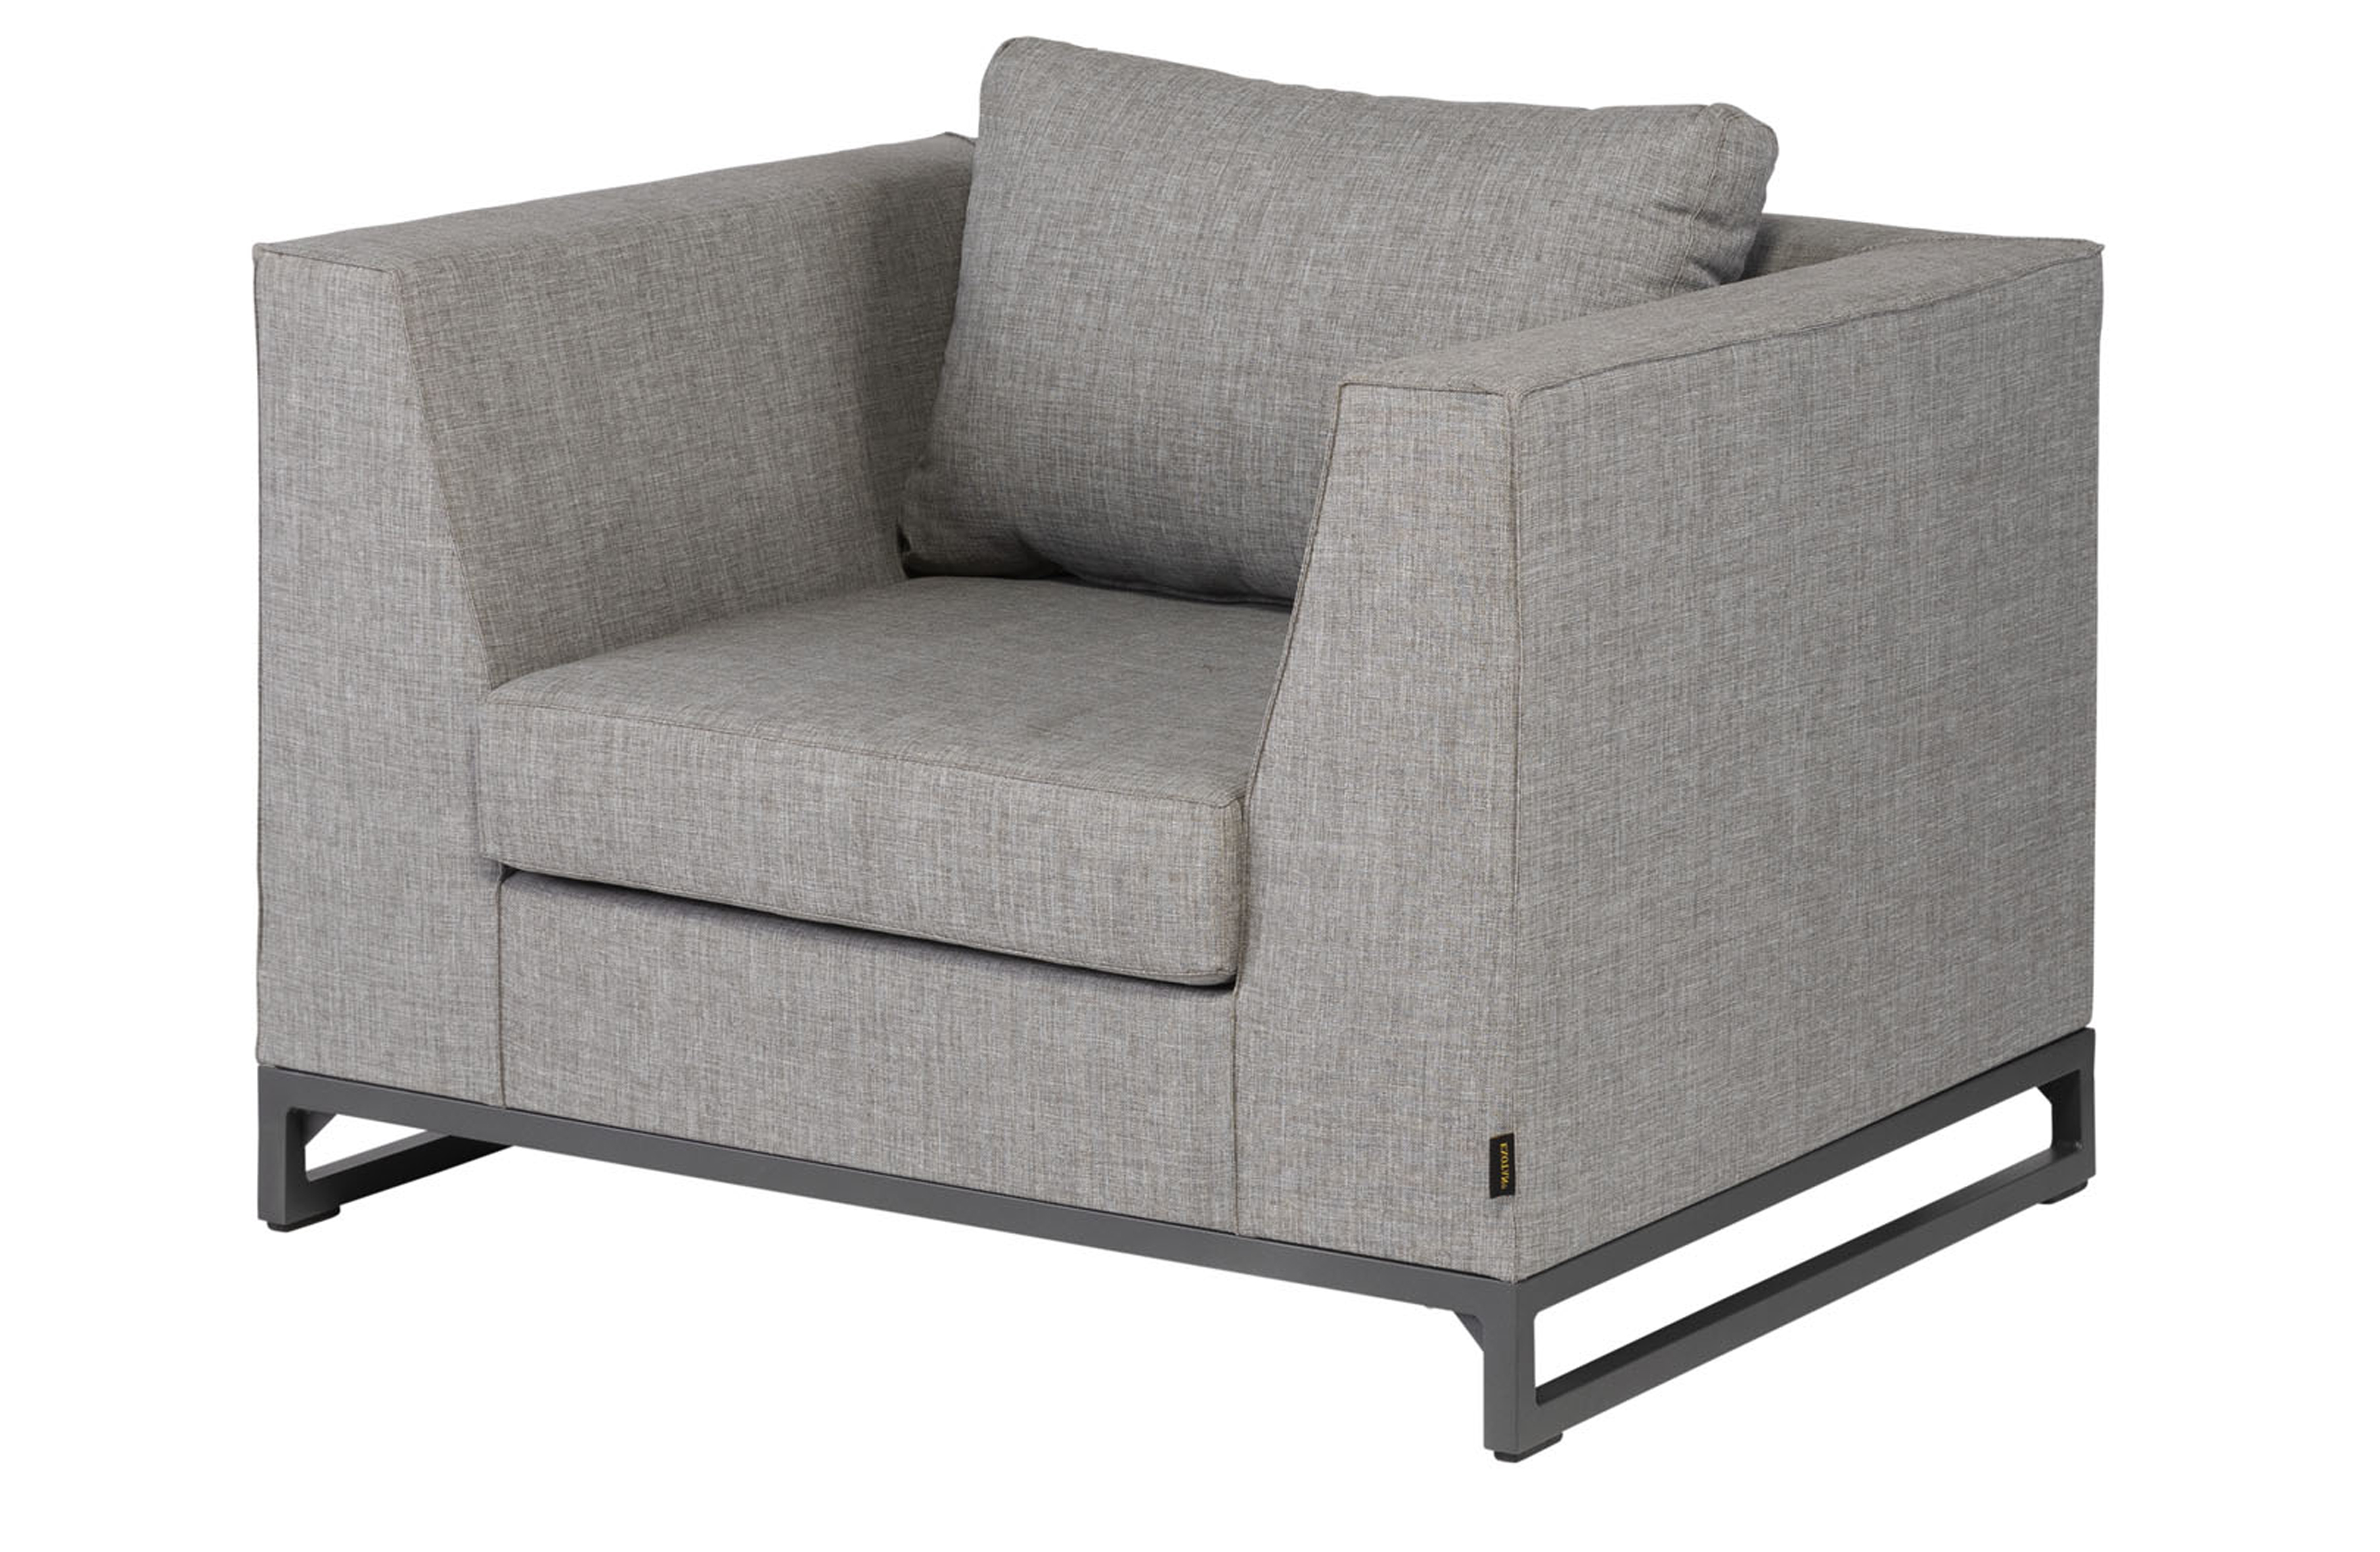 EXOTAN Rhodos loungestol til haven, m. armlæn - askegrå stof og aluminium